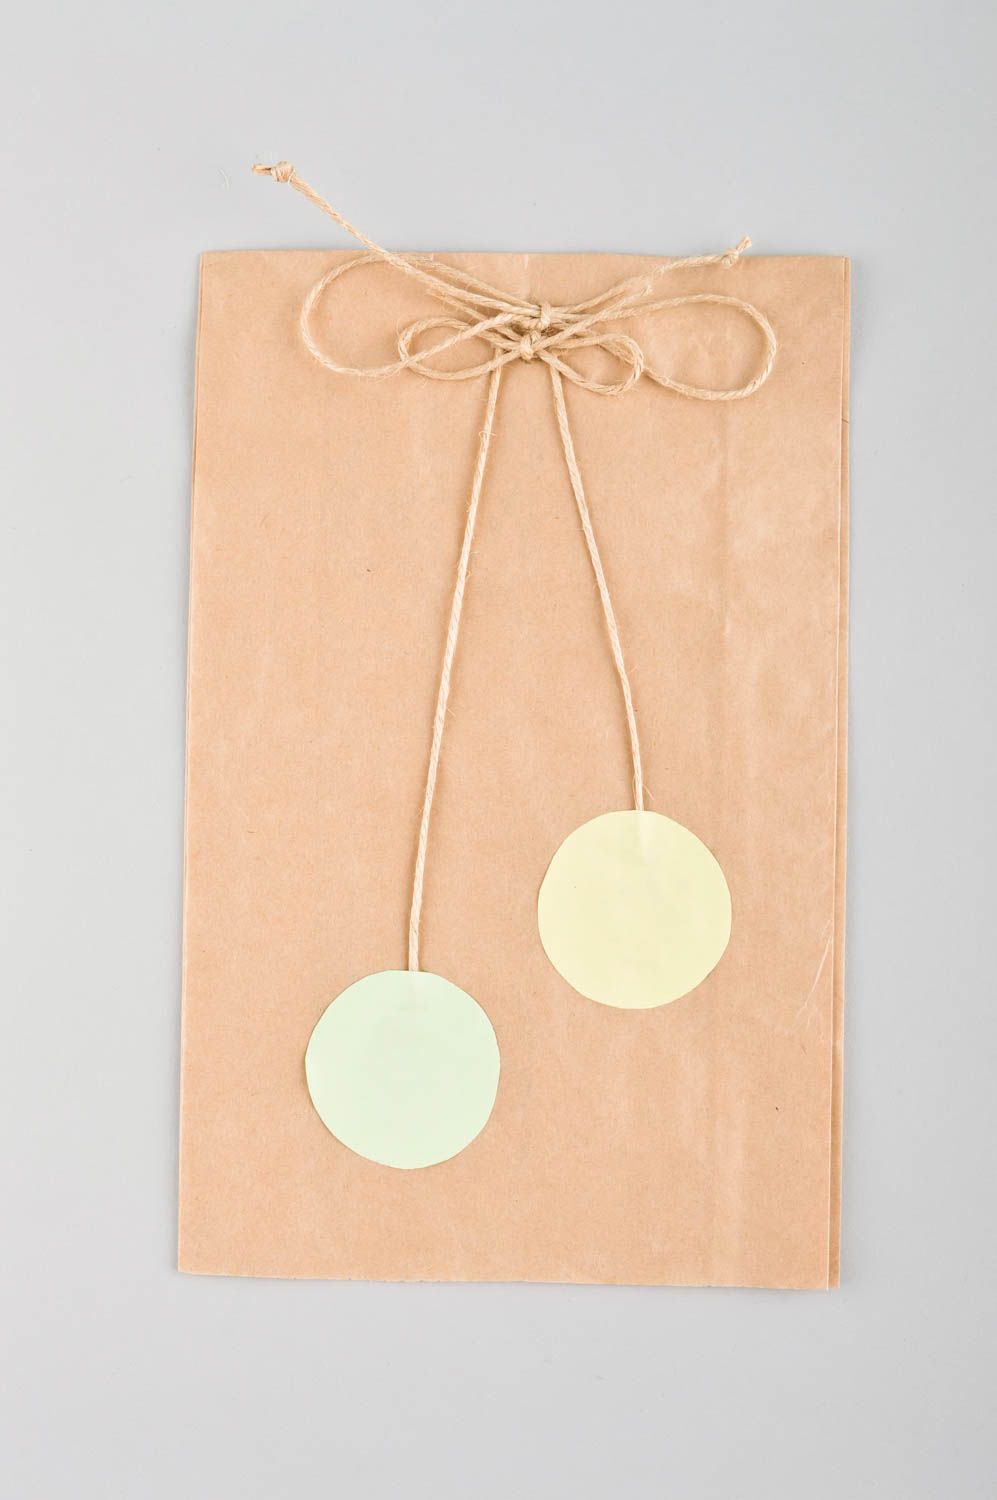 Handmade kreative Geschenkidee Verpackung für Geldgeschenke Geschenk Ideen foto 1